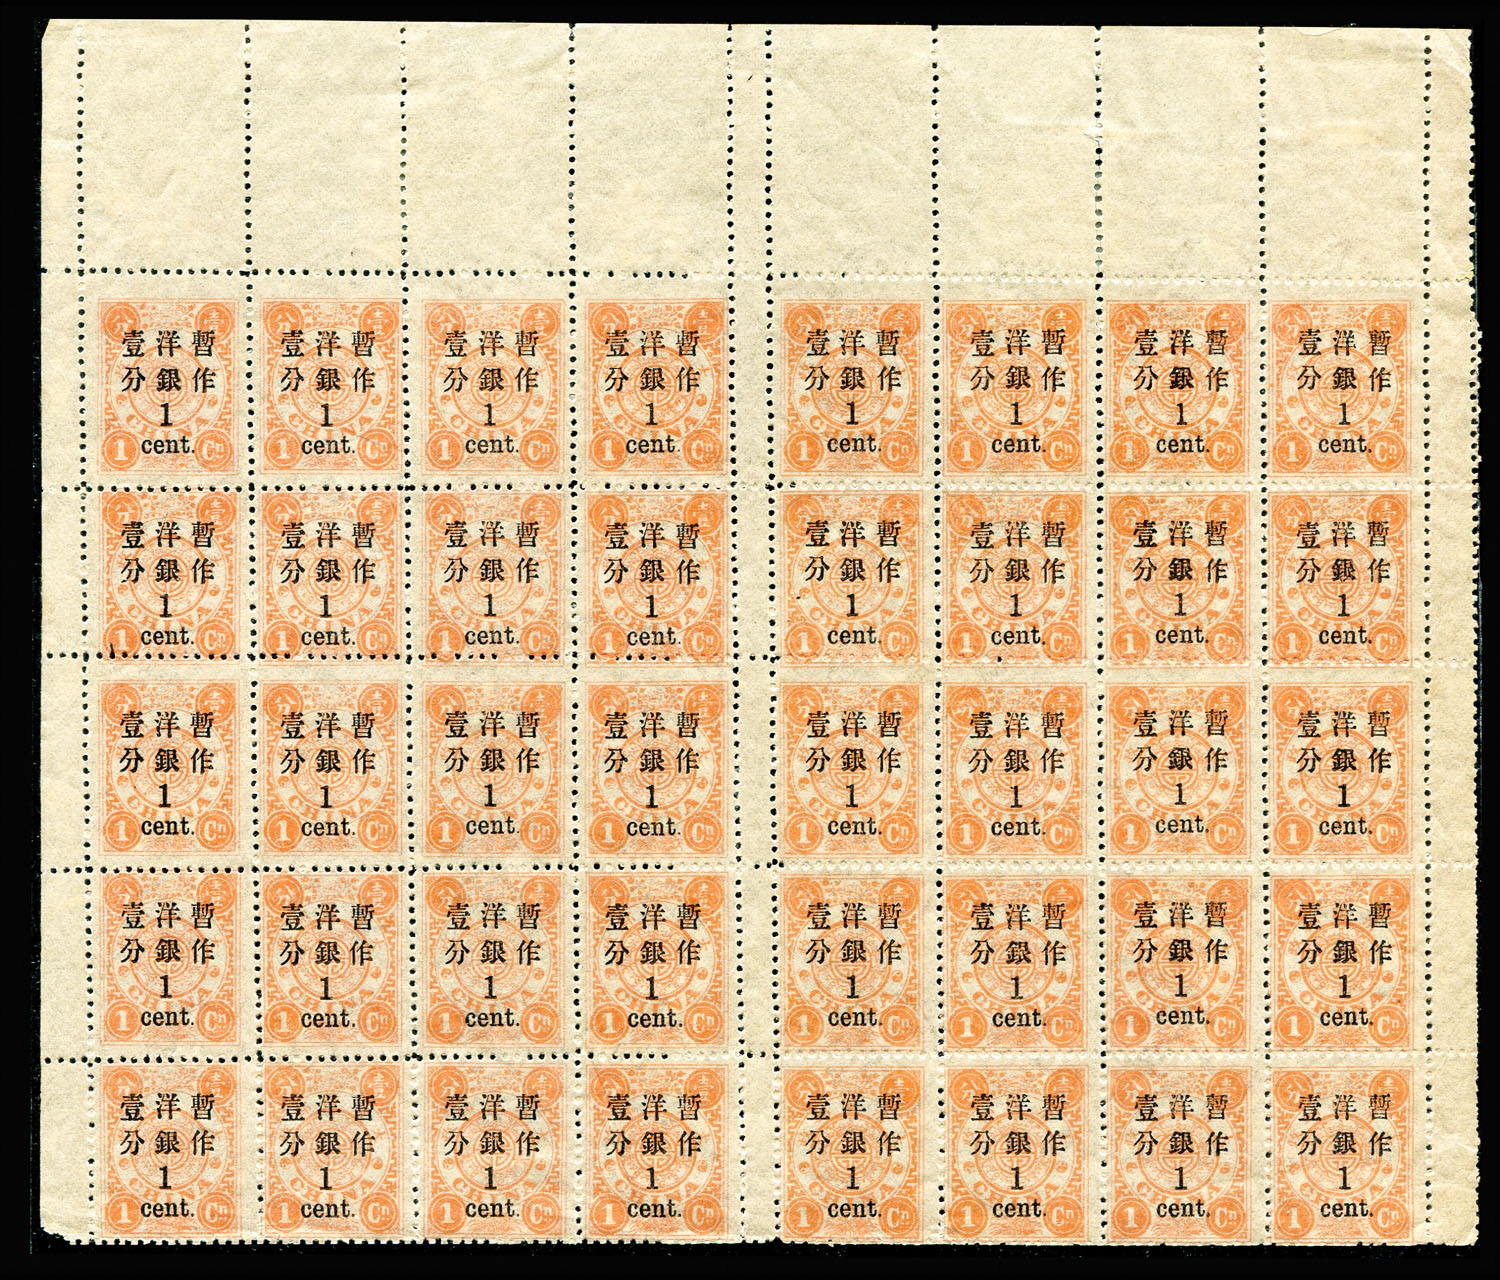 Lot 303 - China  -  Cherrystone Auctions U.S. & Worldwide Stamps & Postal History